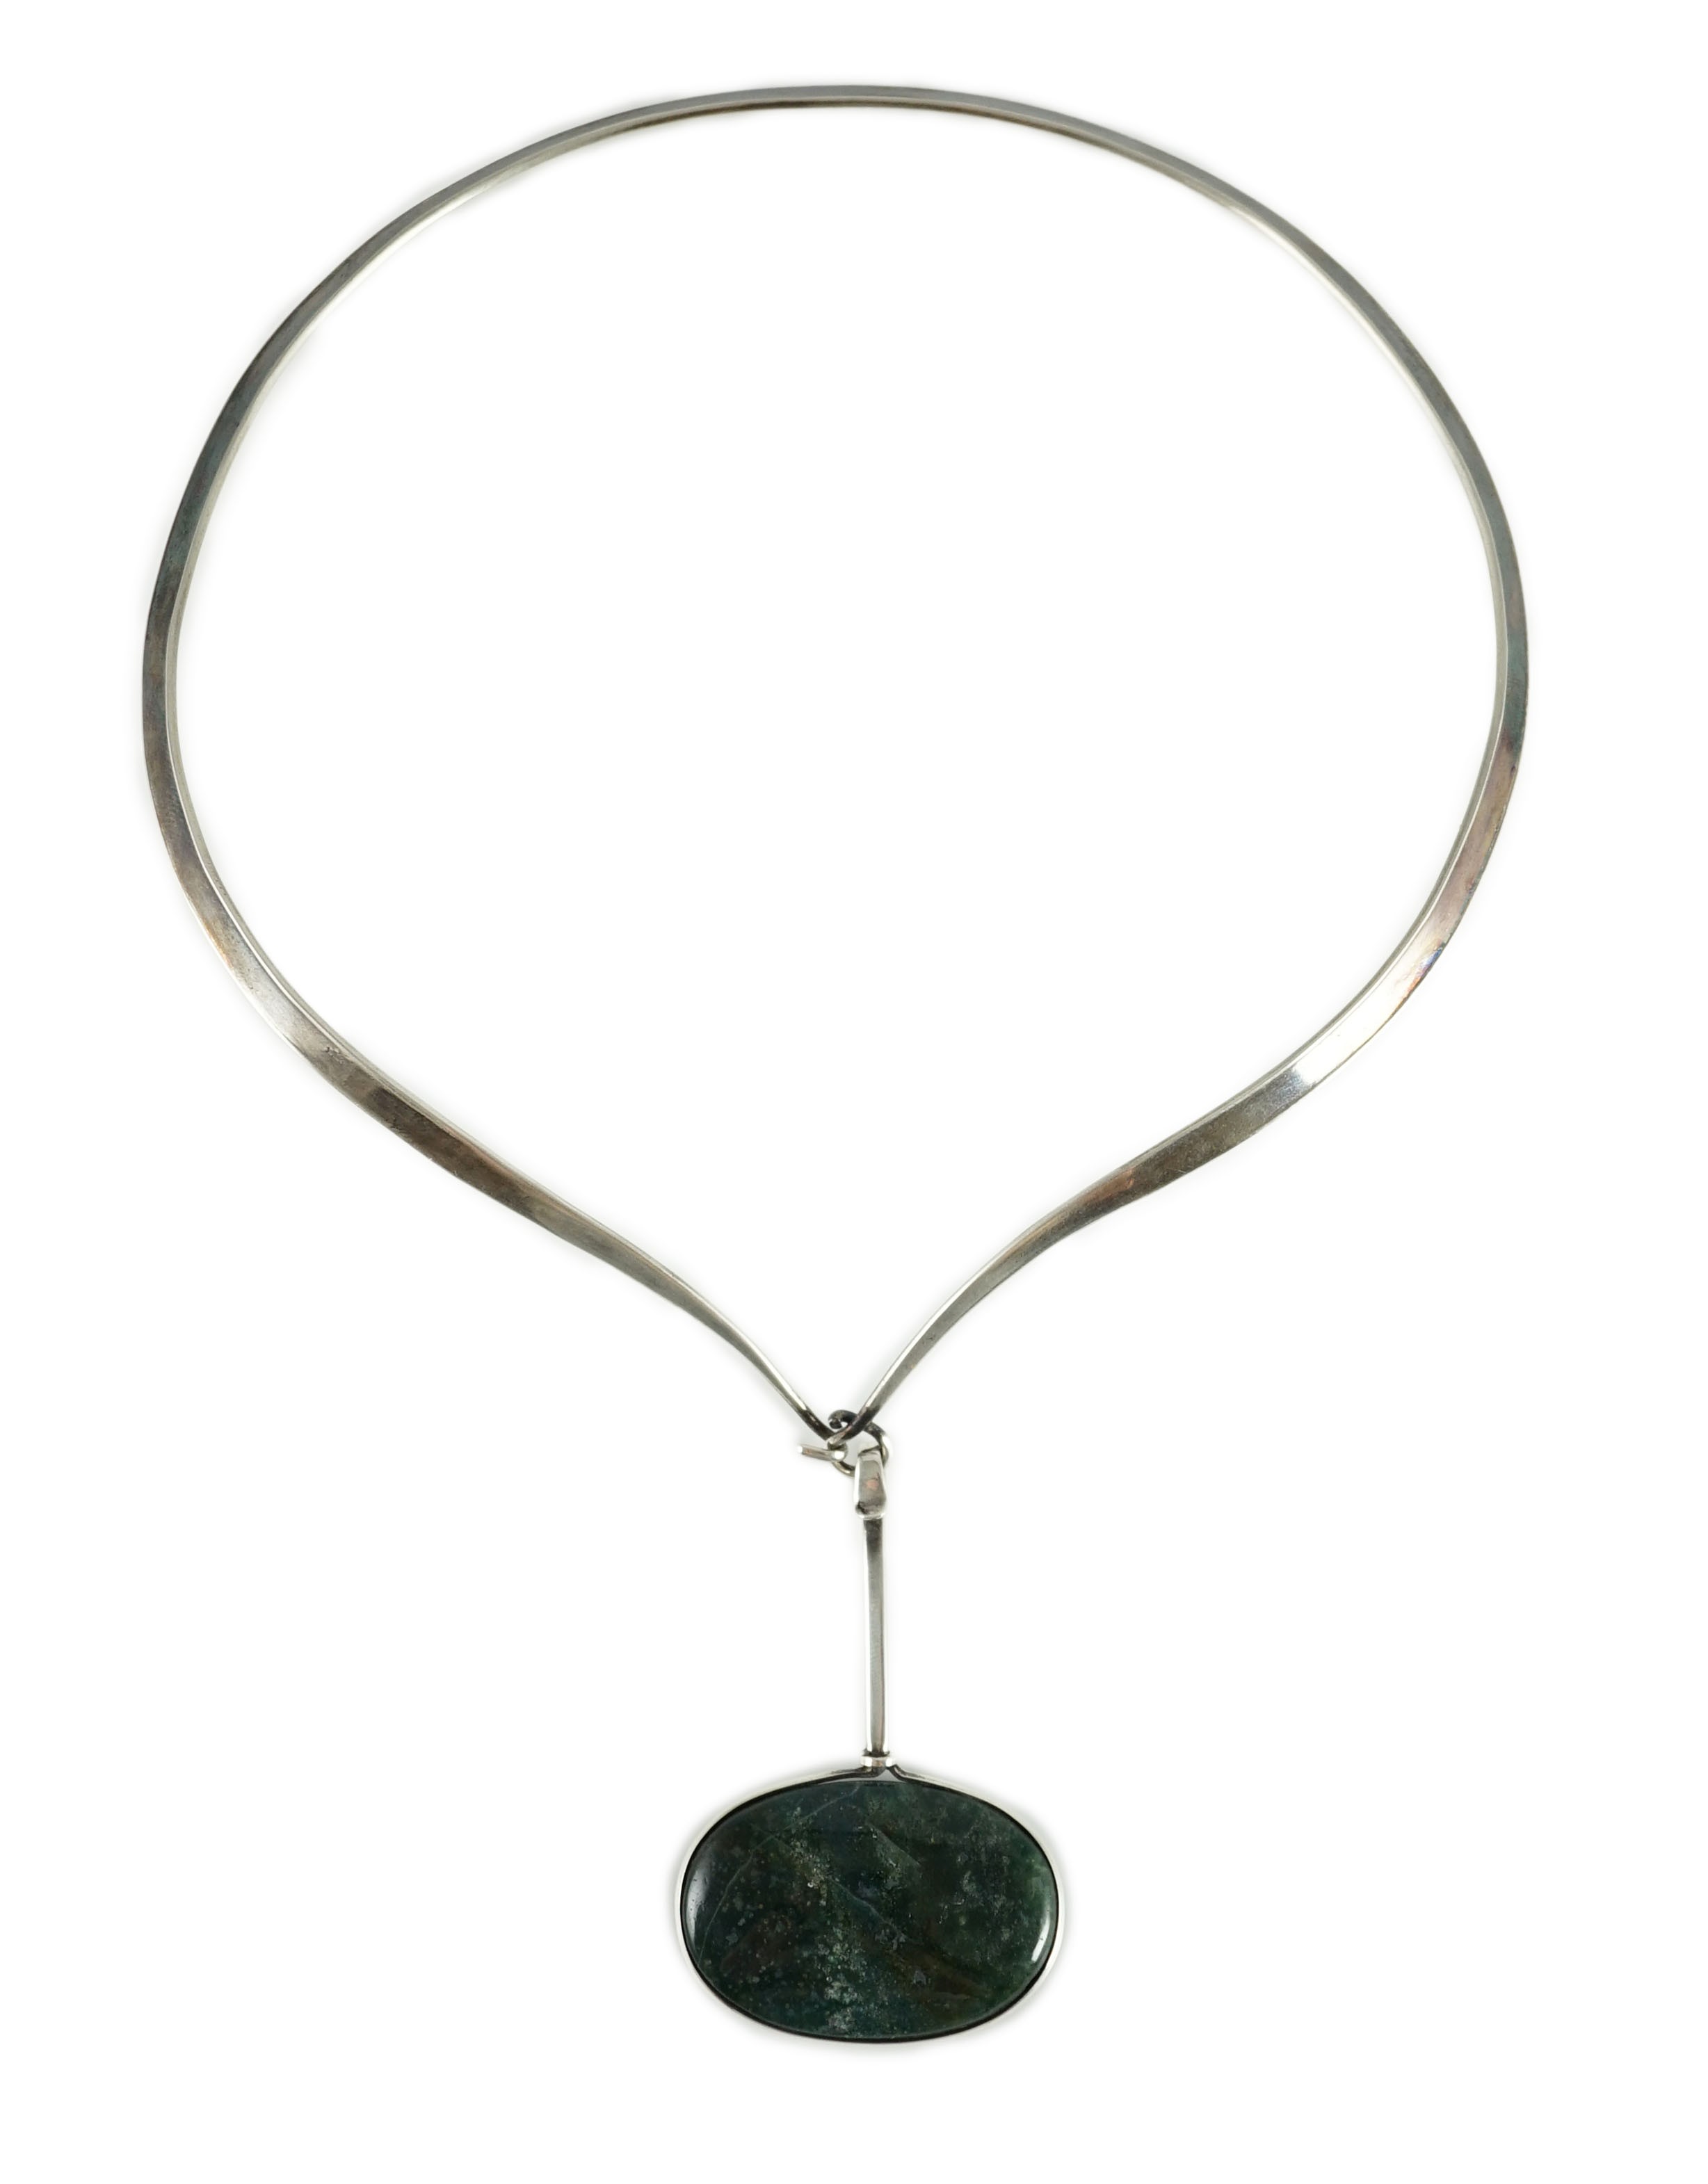 A Vivianna Torun for Georg Jensen sterling silver and moss agate set pendant necklet                                                                                                                                        